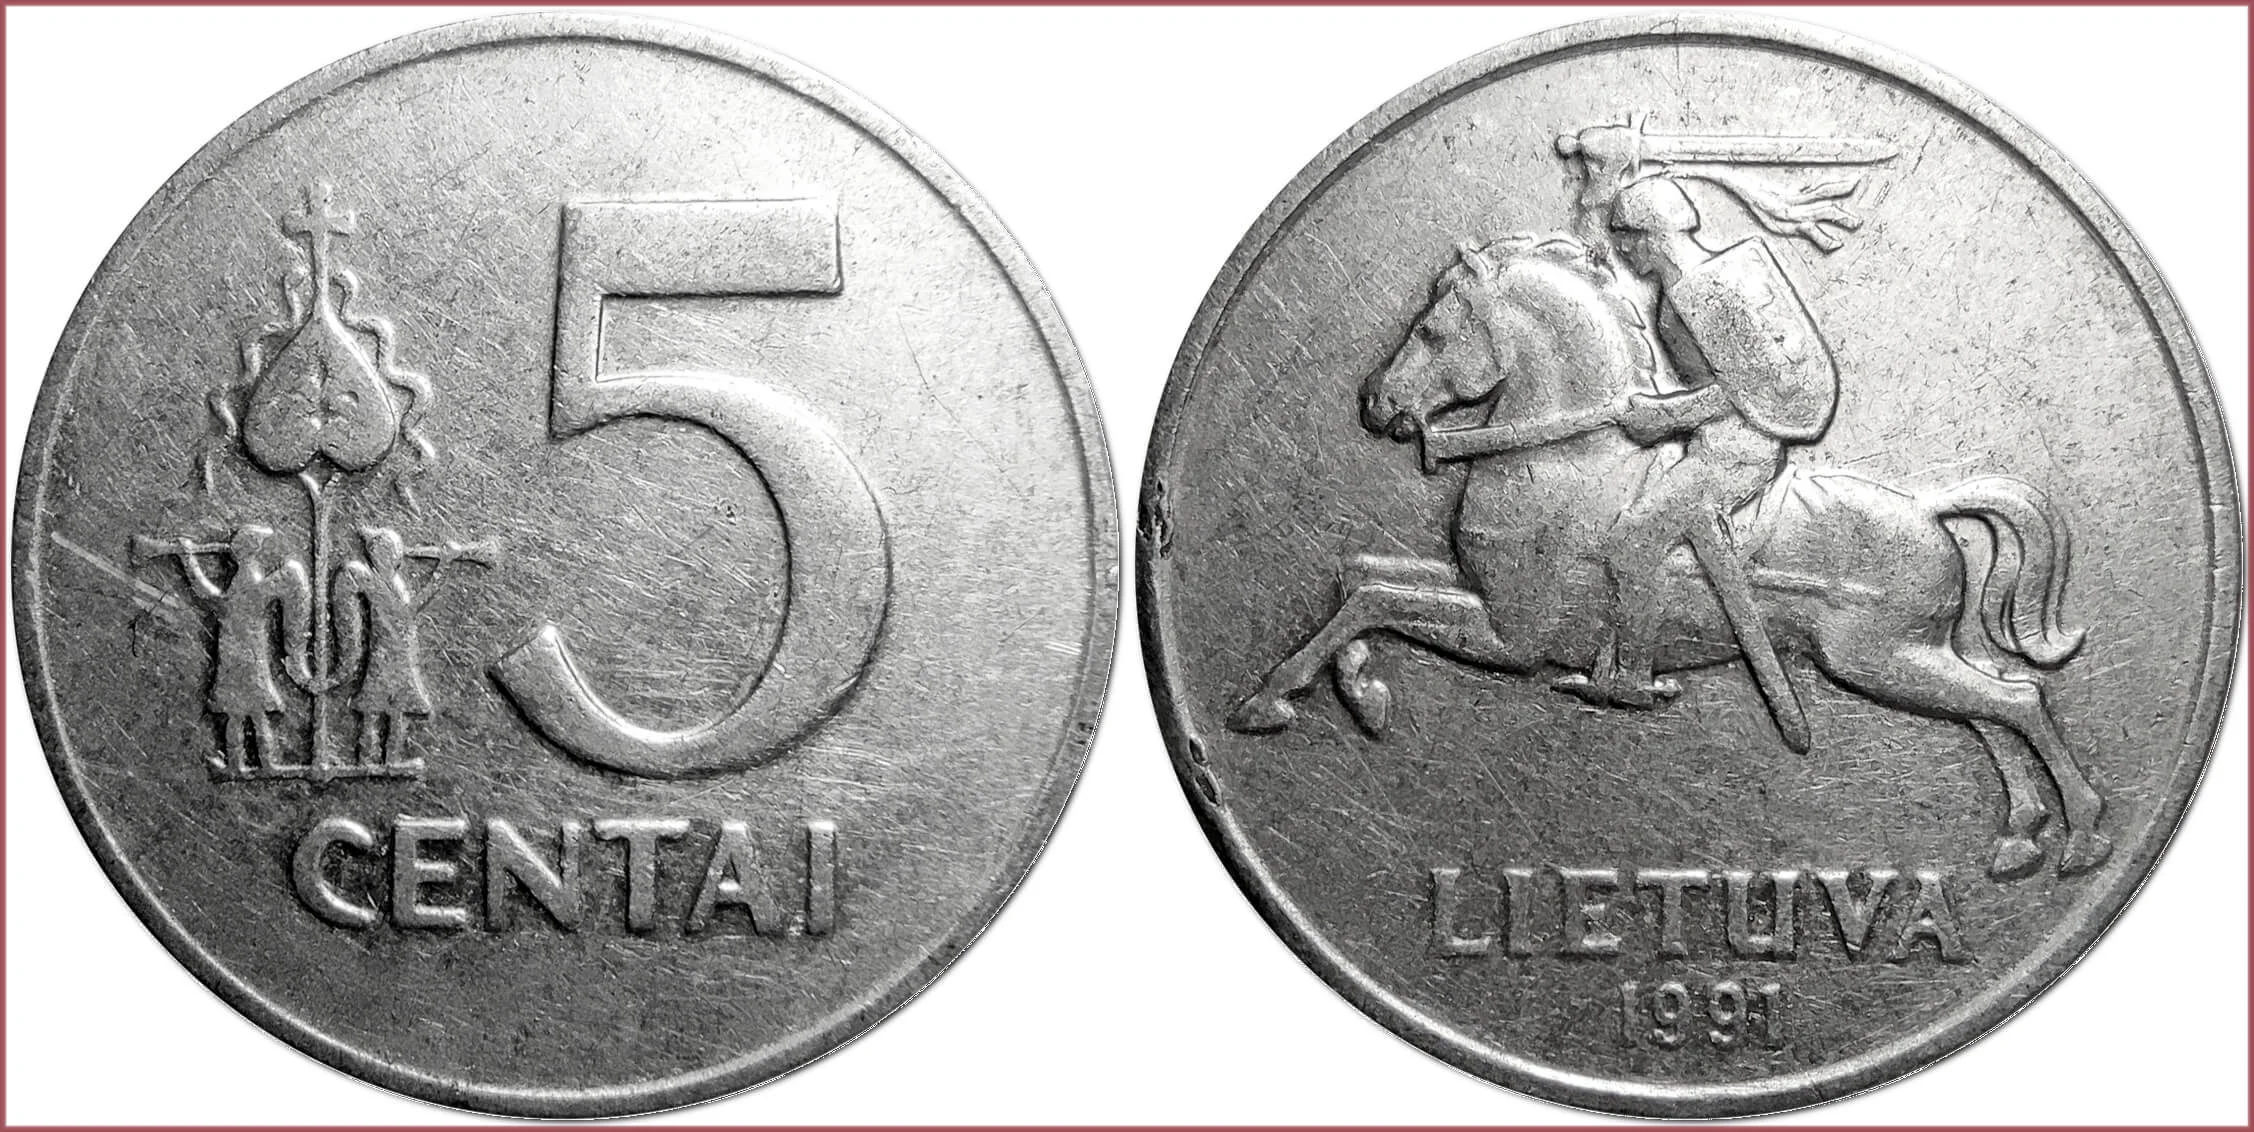 5 centai, 1991: Republic of Lithuania